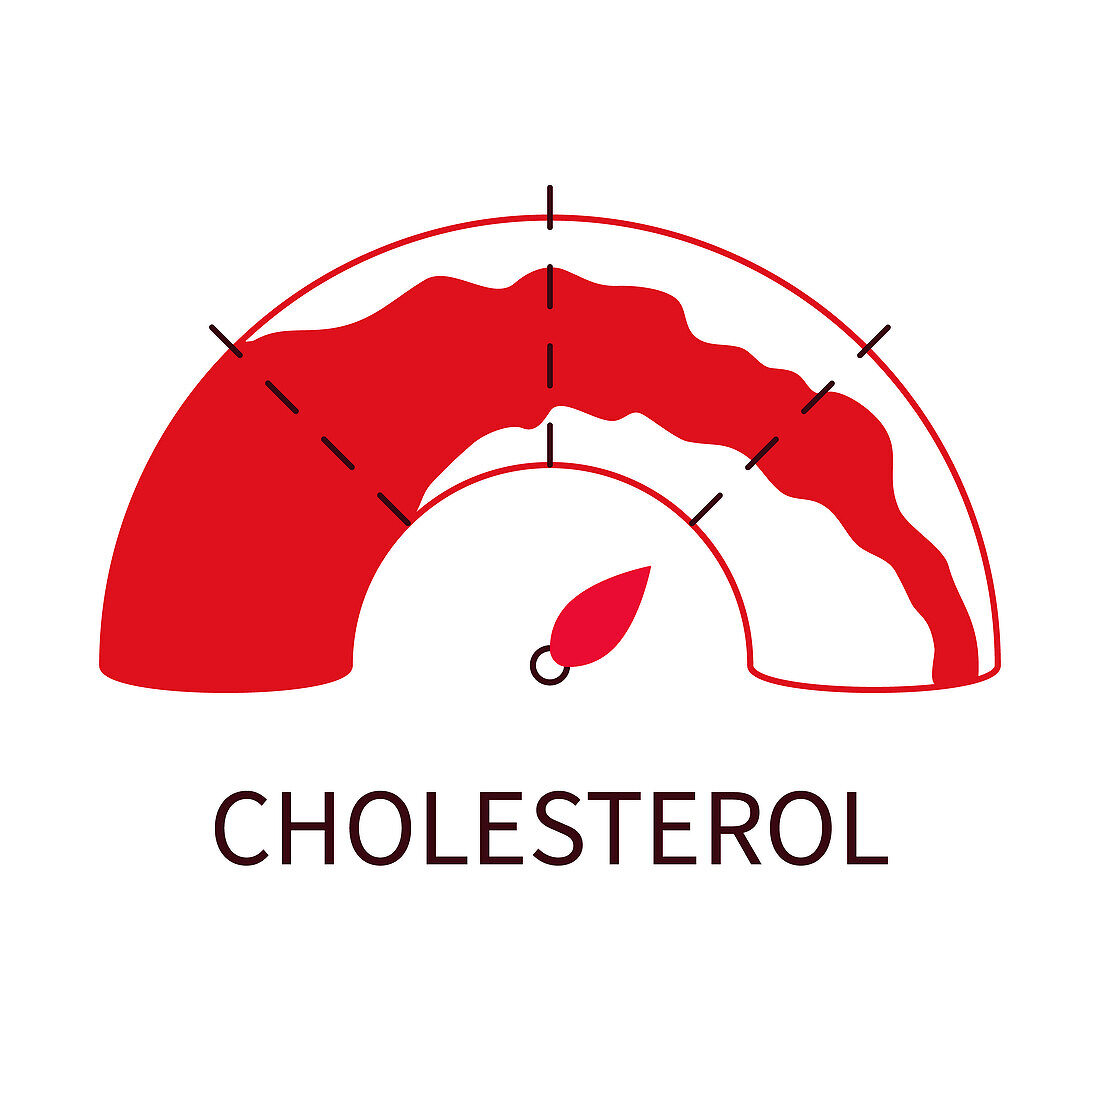 Cholesterol level, conceptual illustration